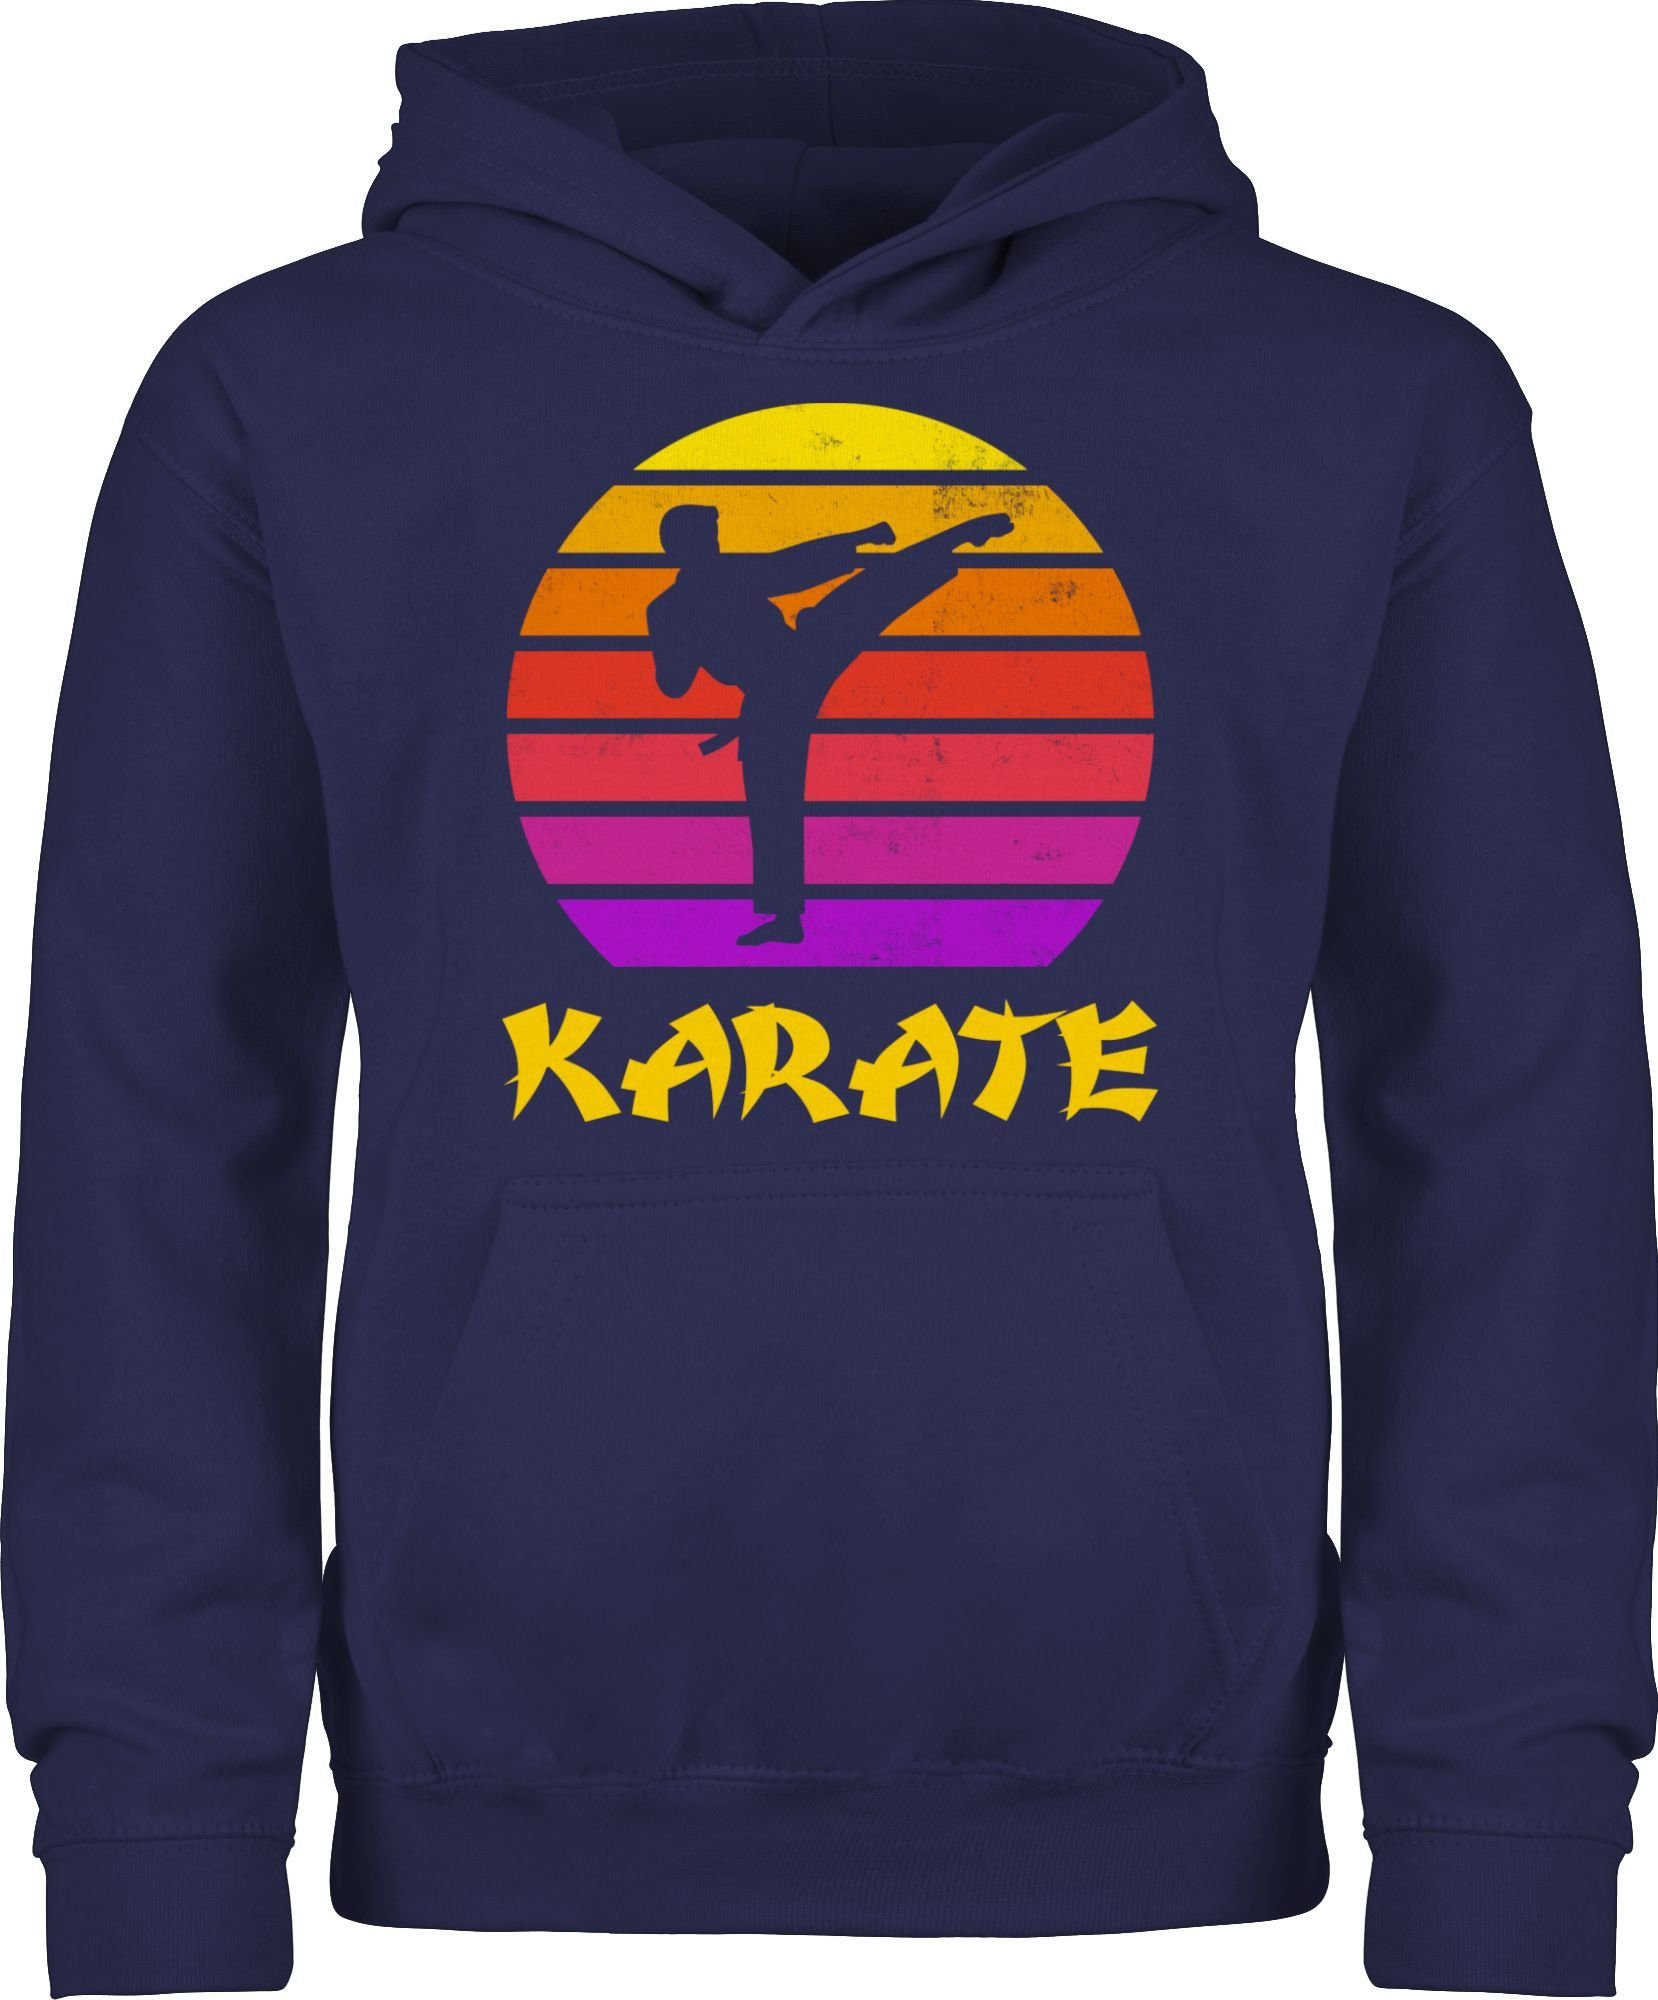 Shirtracer Hoodie Karate Retro Sonne Kinder Sport Kleidung 3 Navy Blau